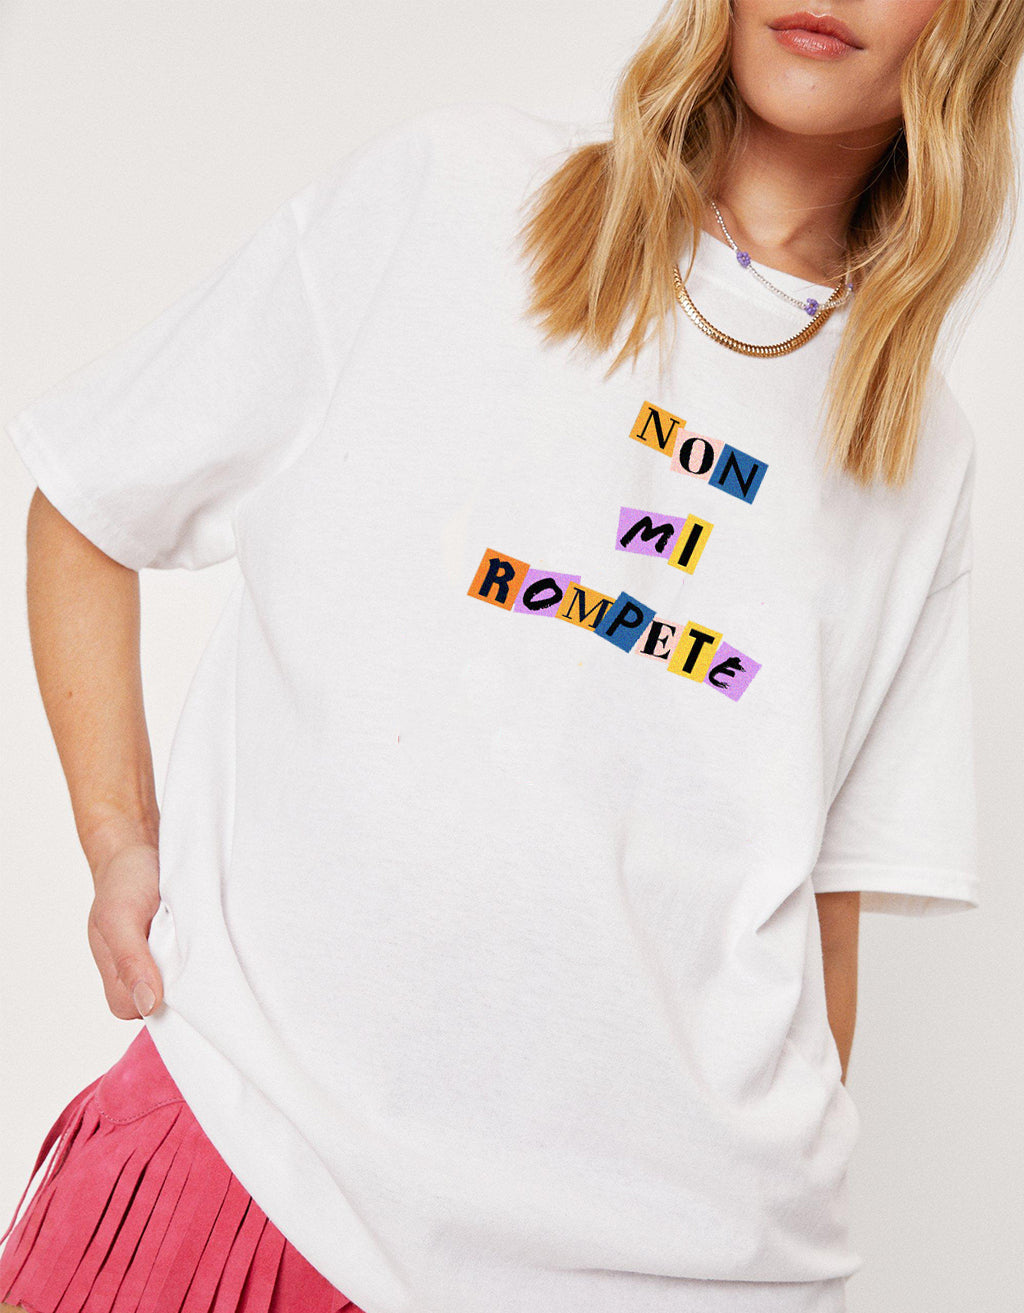 T-Shirt  "Non mi rompete"